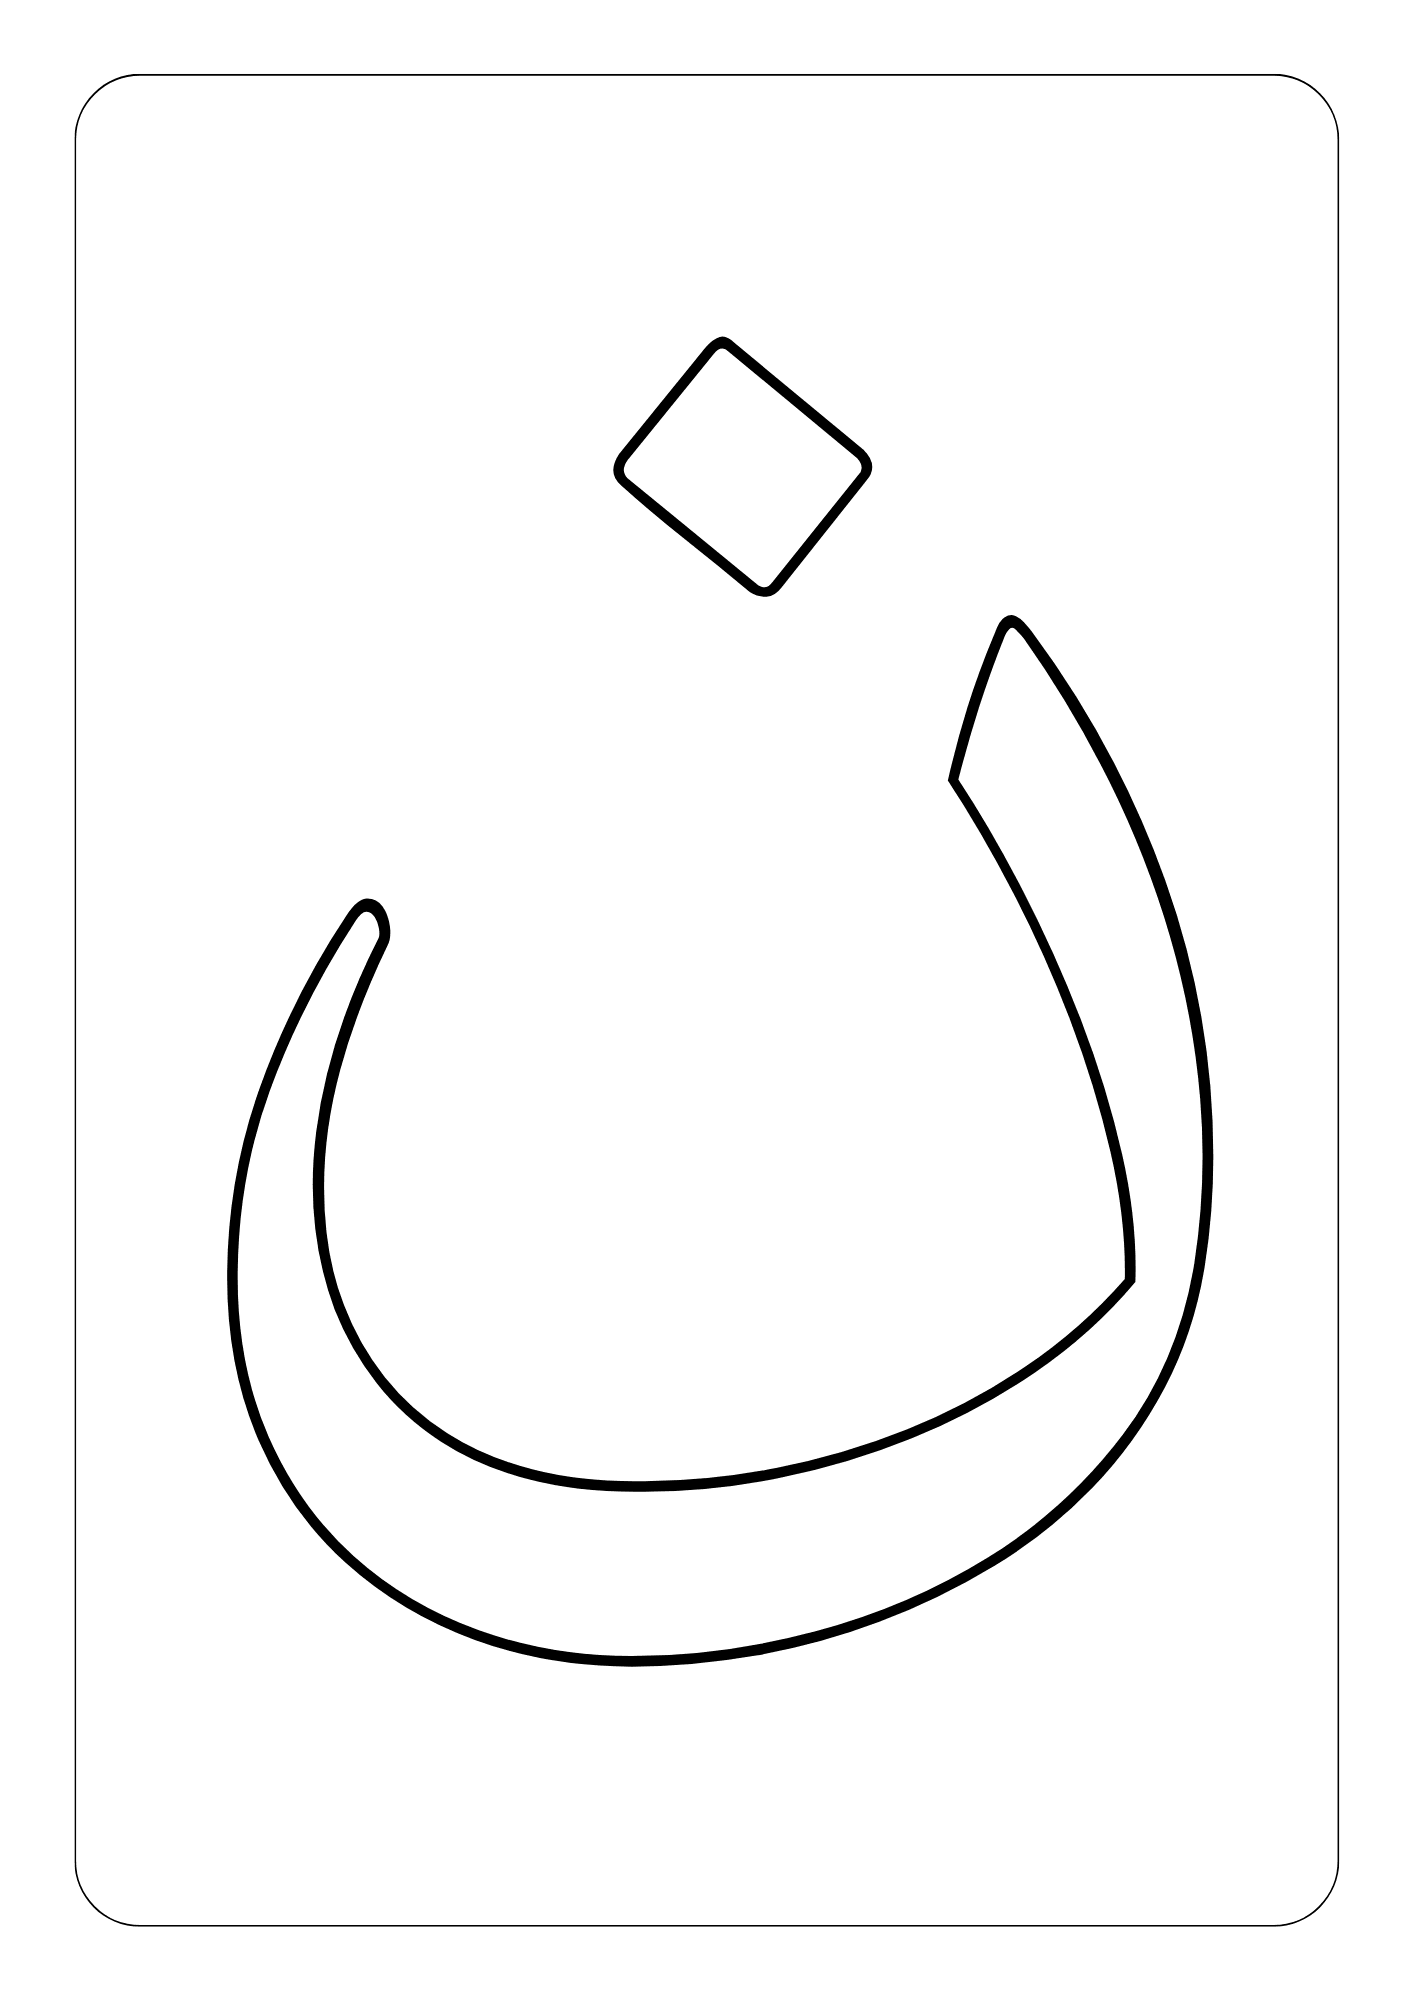 Large Arabic Letter Template Outlines - Free Printable - حروف عربية كبيرة لأنشطة الحسية مجانًا - Arabic Joy